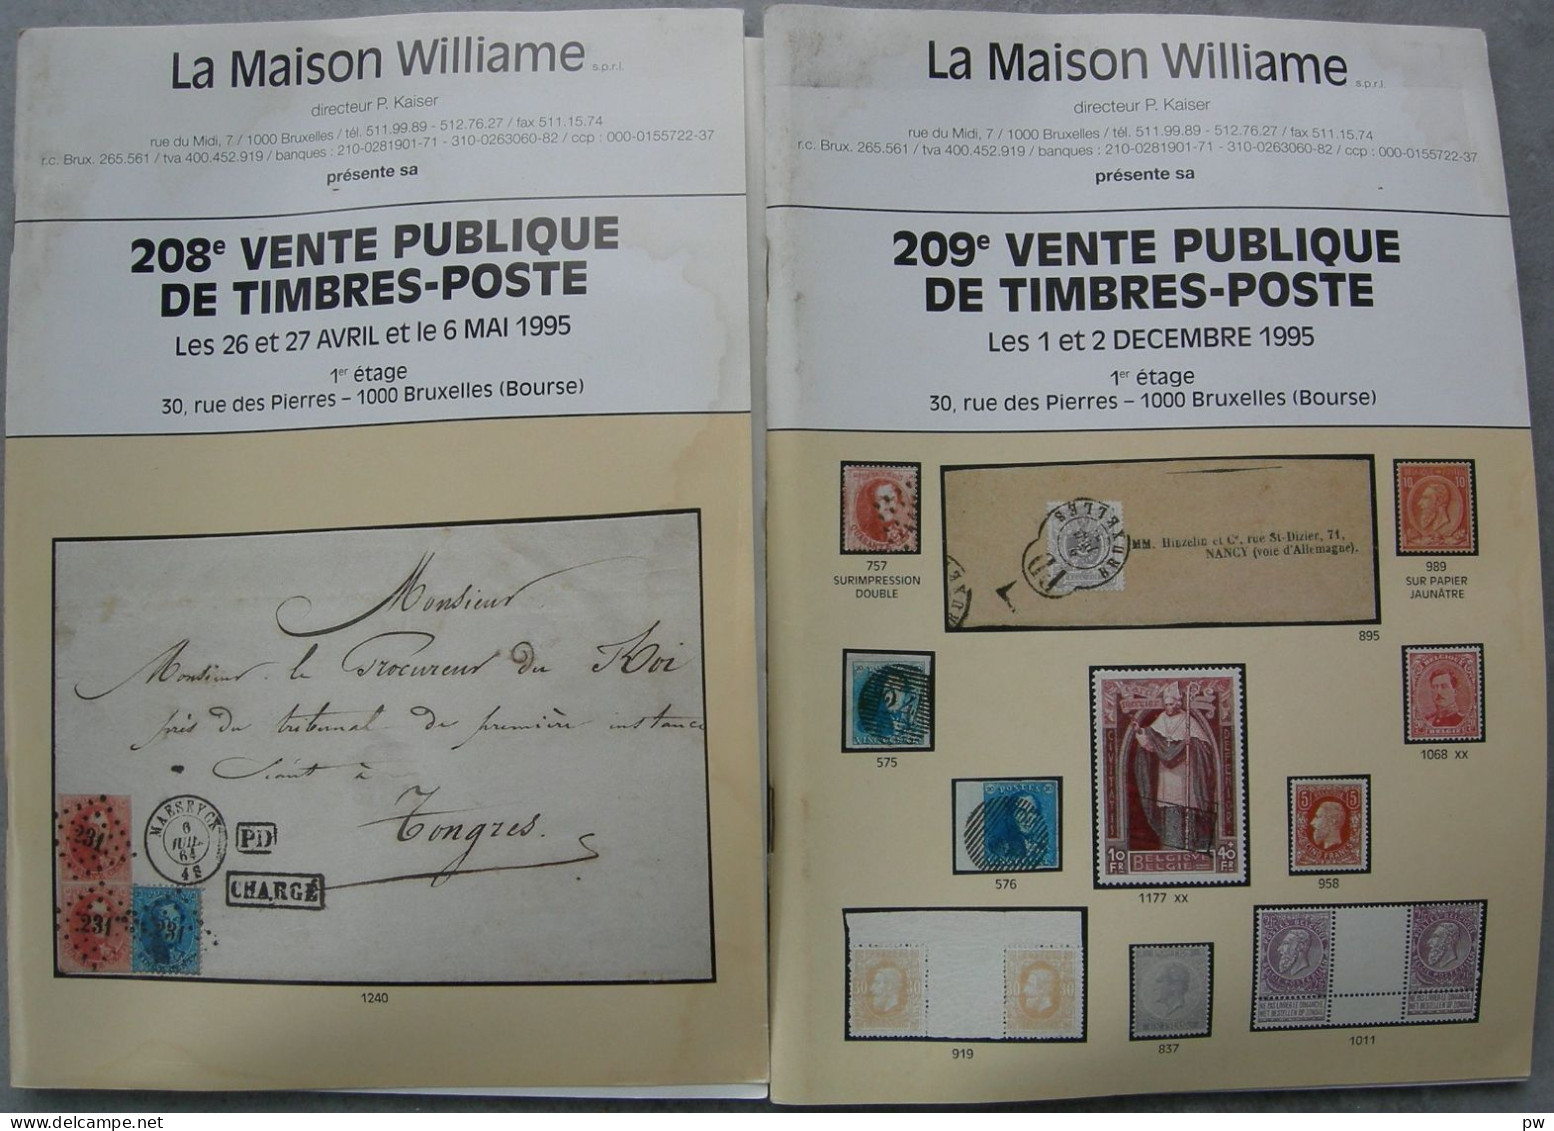 VENTES WILLIAME (Kaiser) 1995 208 Et 209e Vente - Catalogues For Auction Houses